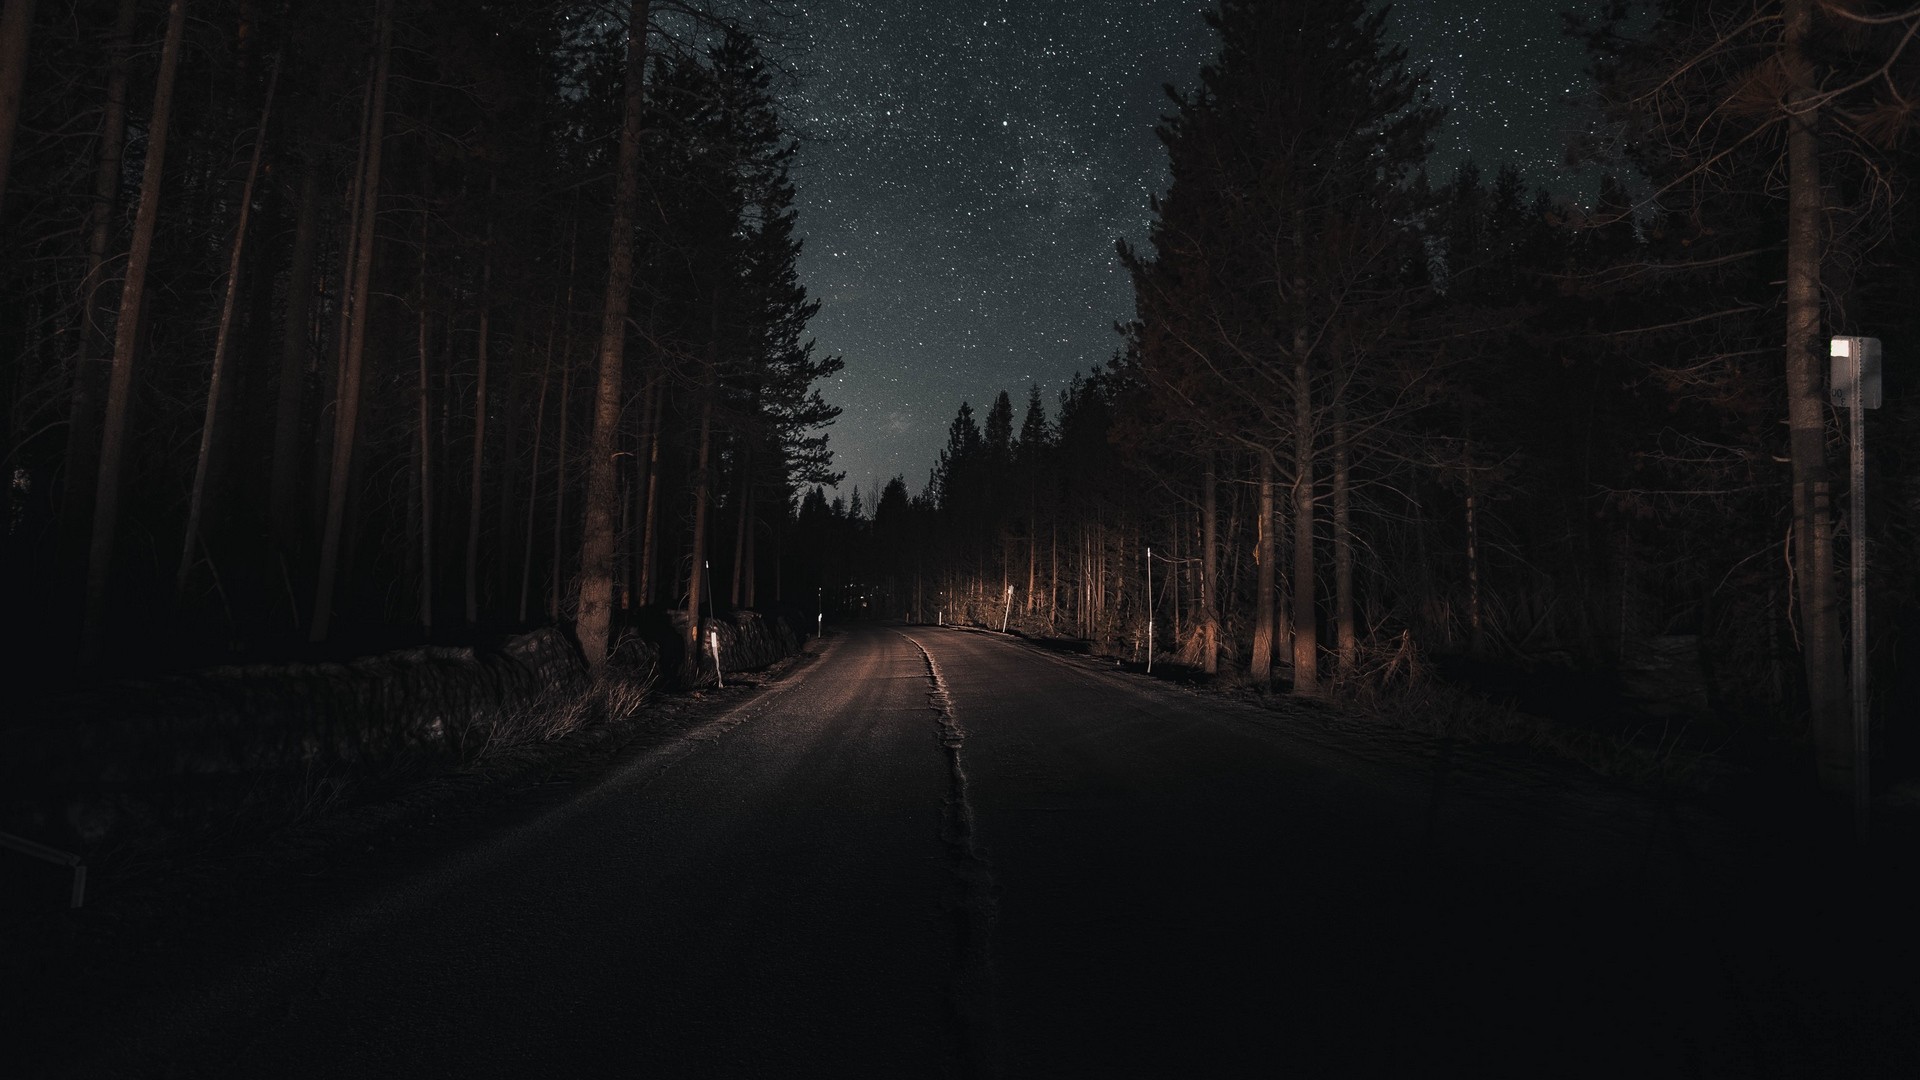 1920x1080 wallpapers: 道路，森林，夜晚，繁星点点的天空，转弯 (image)